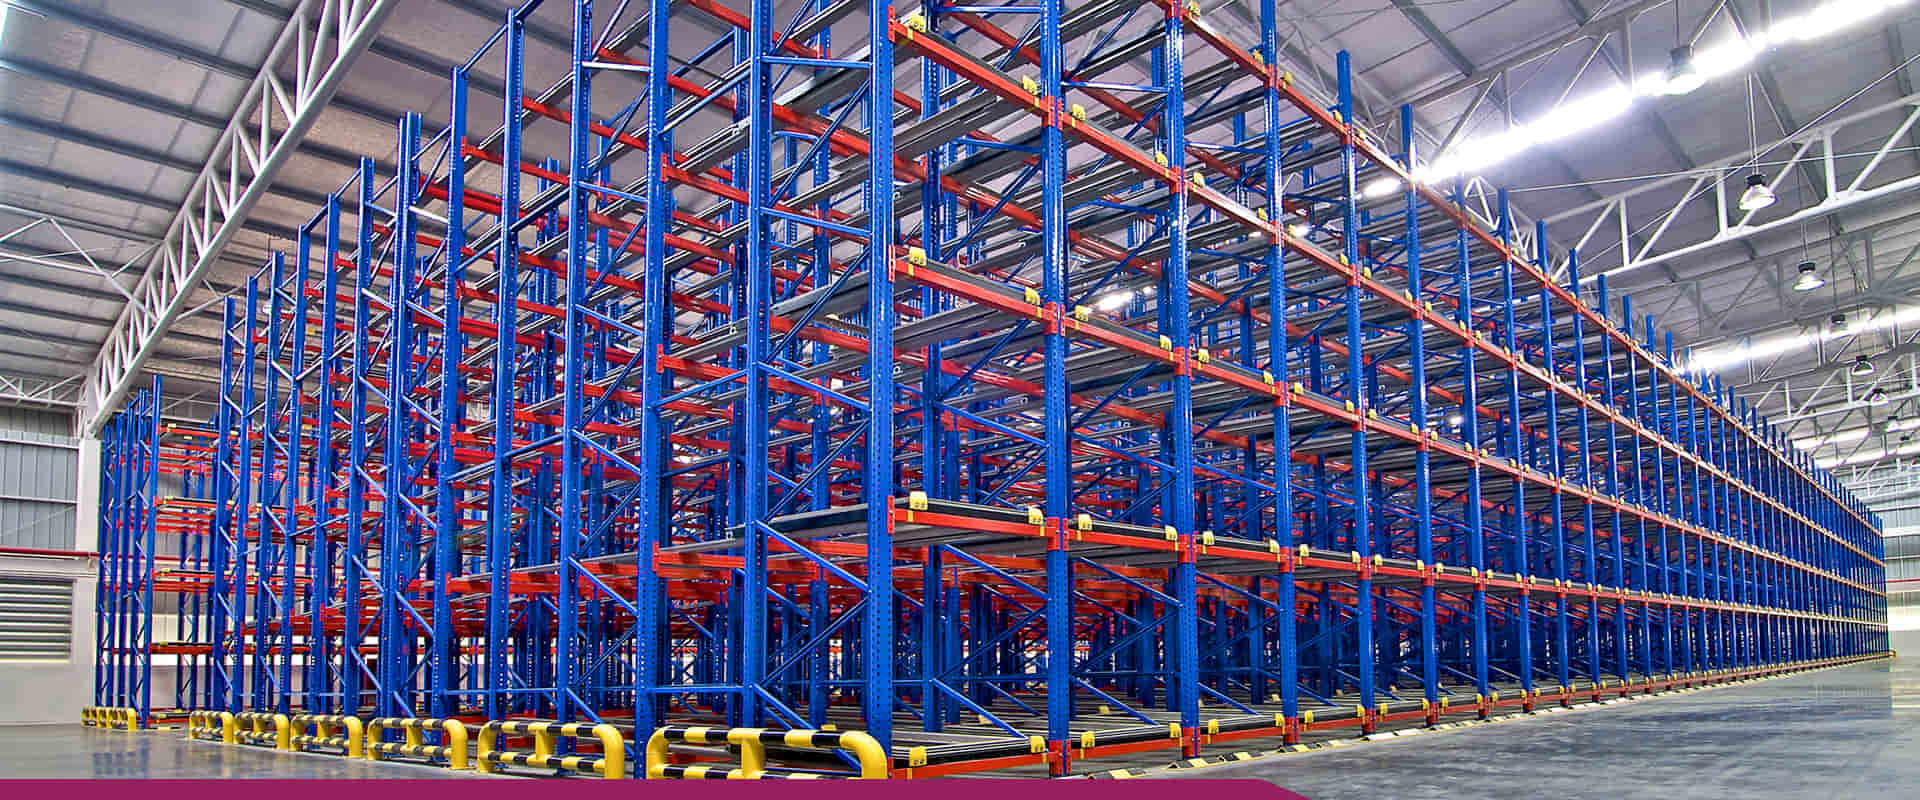 India’s Top Warehouse And Industrial Storage Racks Manufacturer In Kolkata